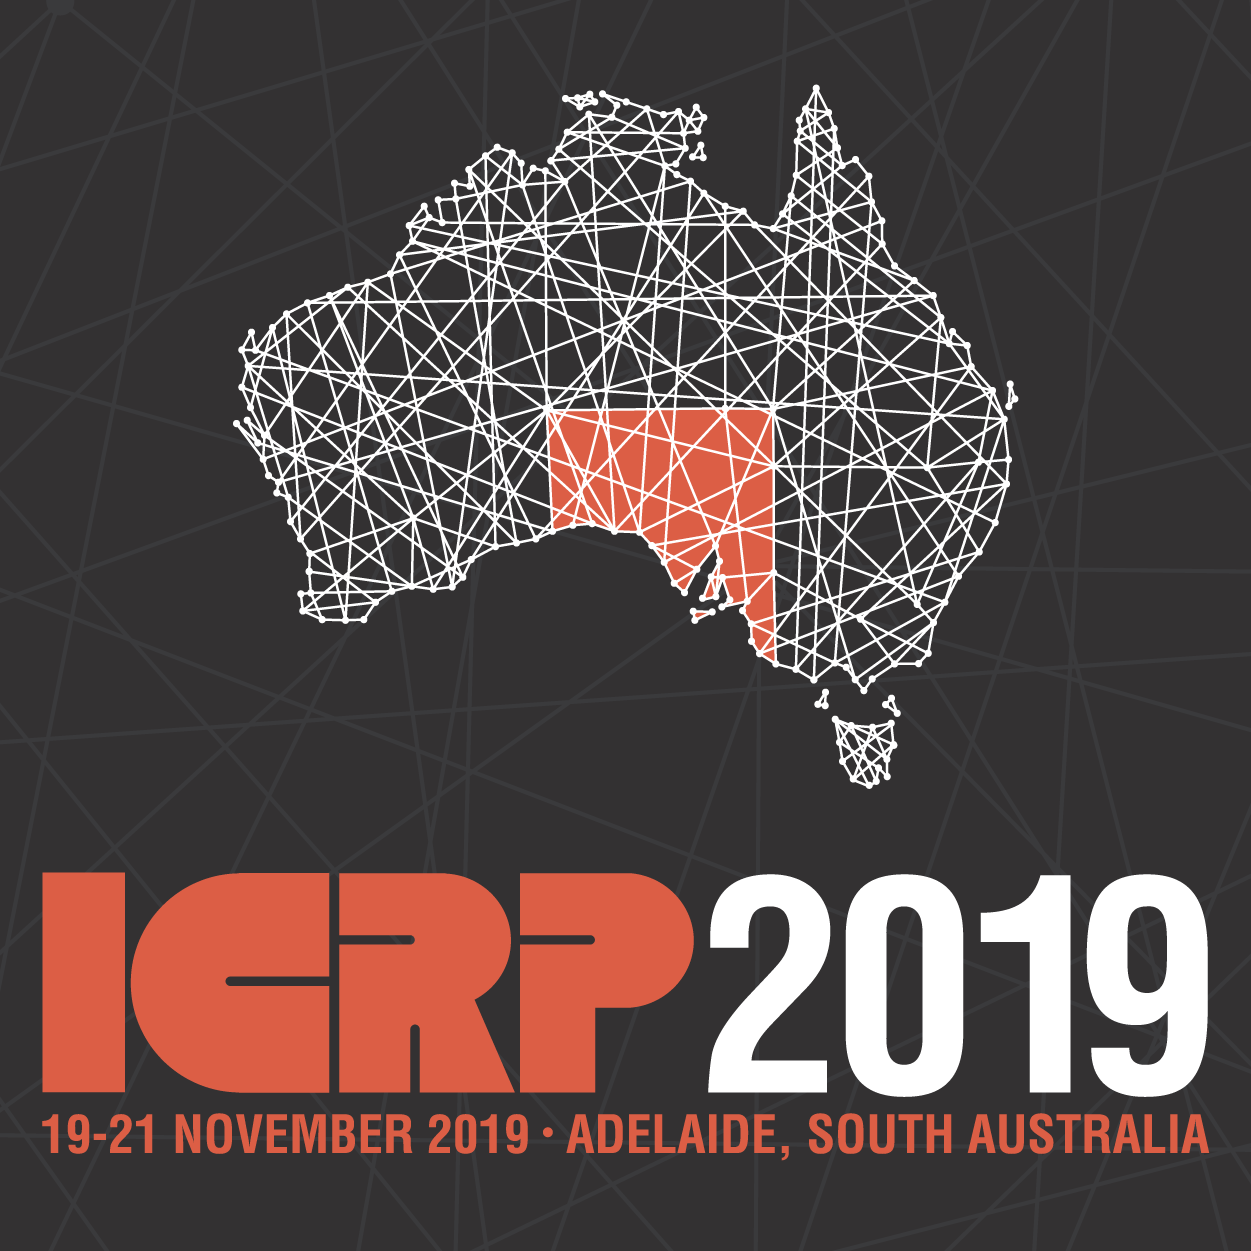 ICRP2019: 19-21 November 2019, Adelaide, South Australia